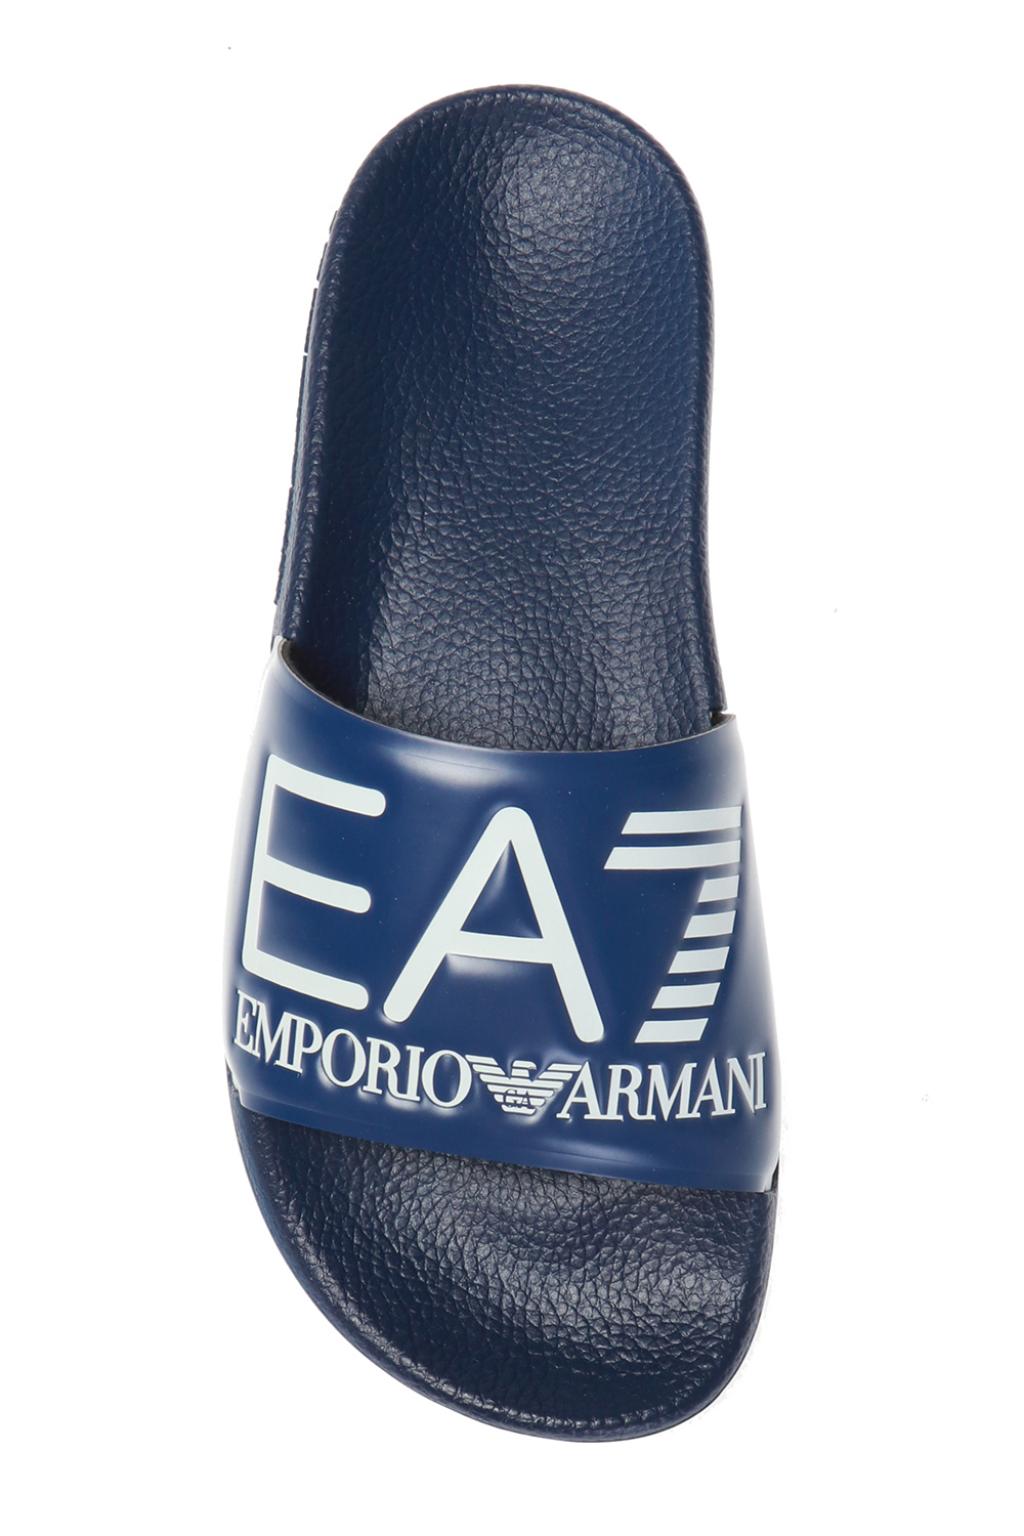 Giorgio ire armani Pre-Owned pinstripe short skirt Окуляри оправа фірмова стильний дорогий бренд ire armani